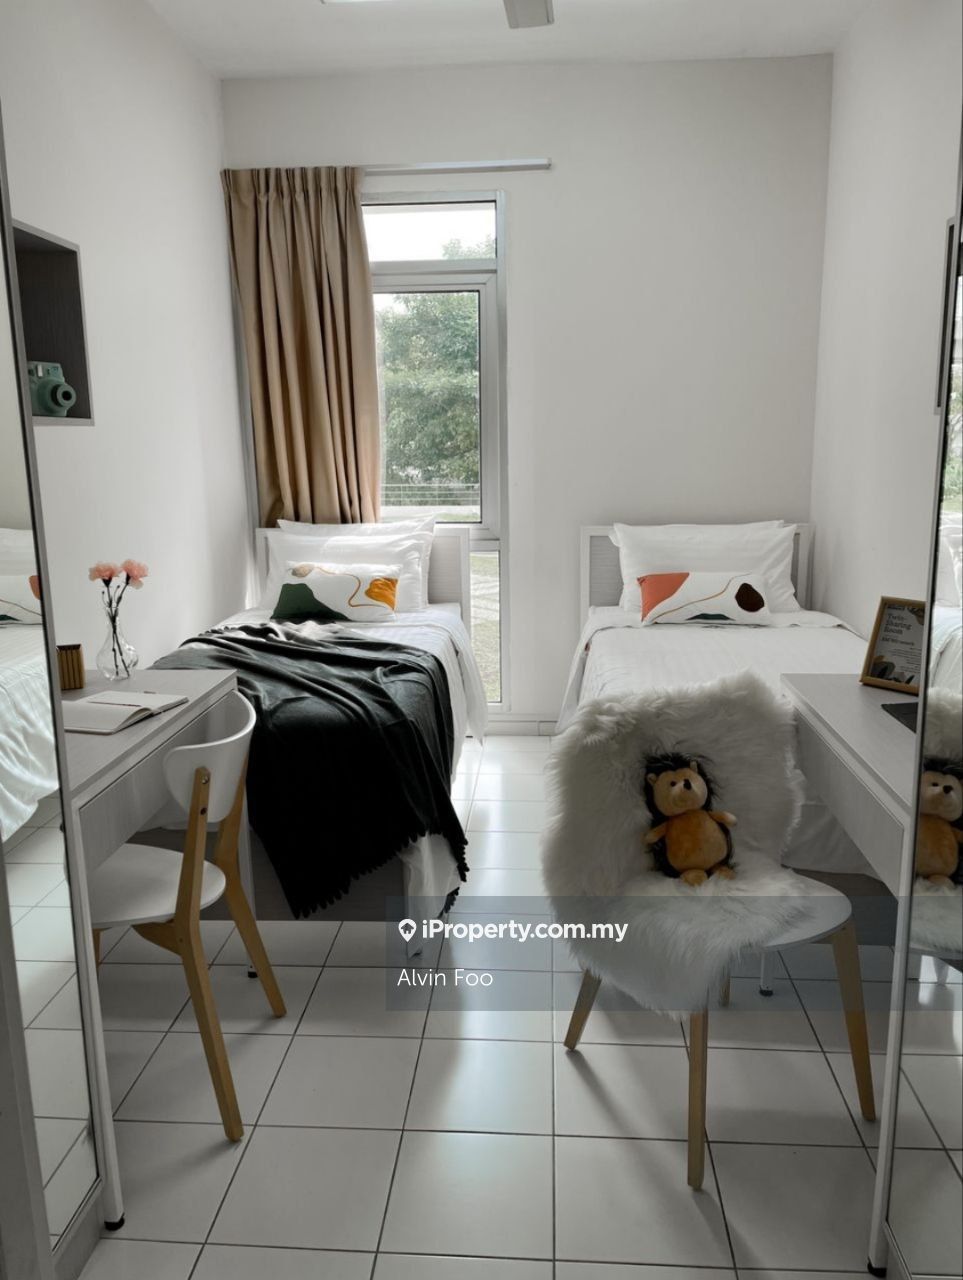 Connect to Monash University Twin Sharing Single Room Rent near BRT